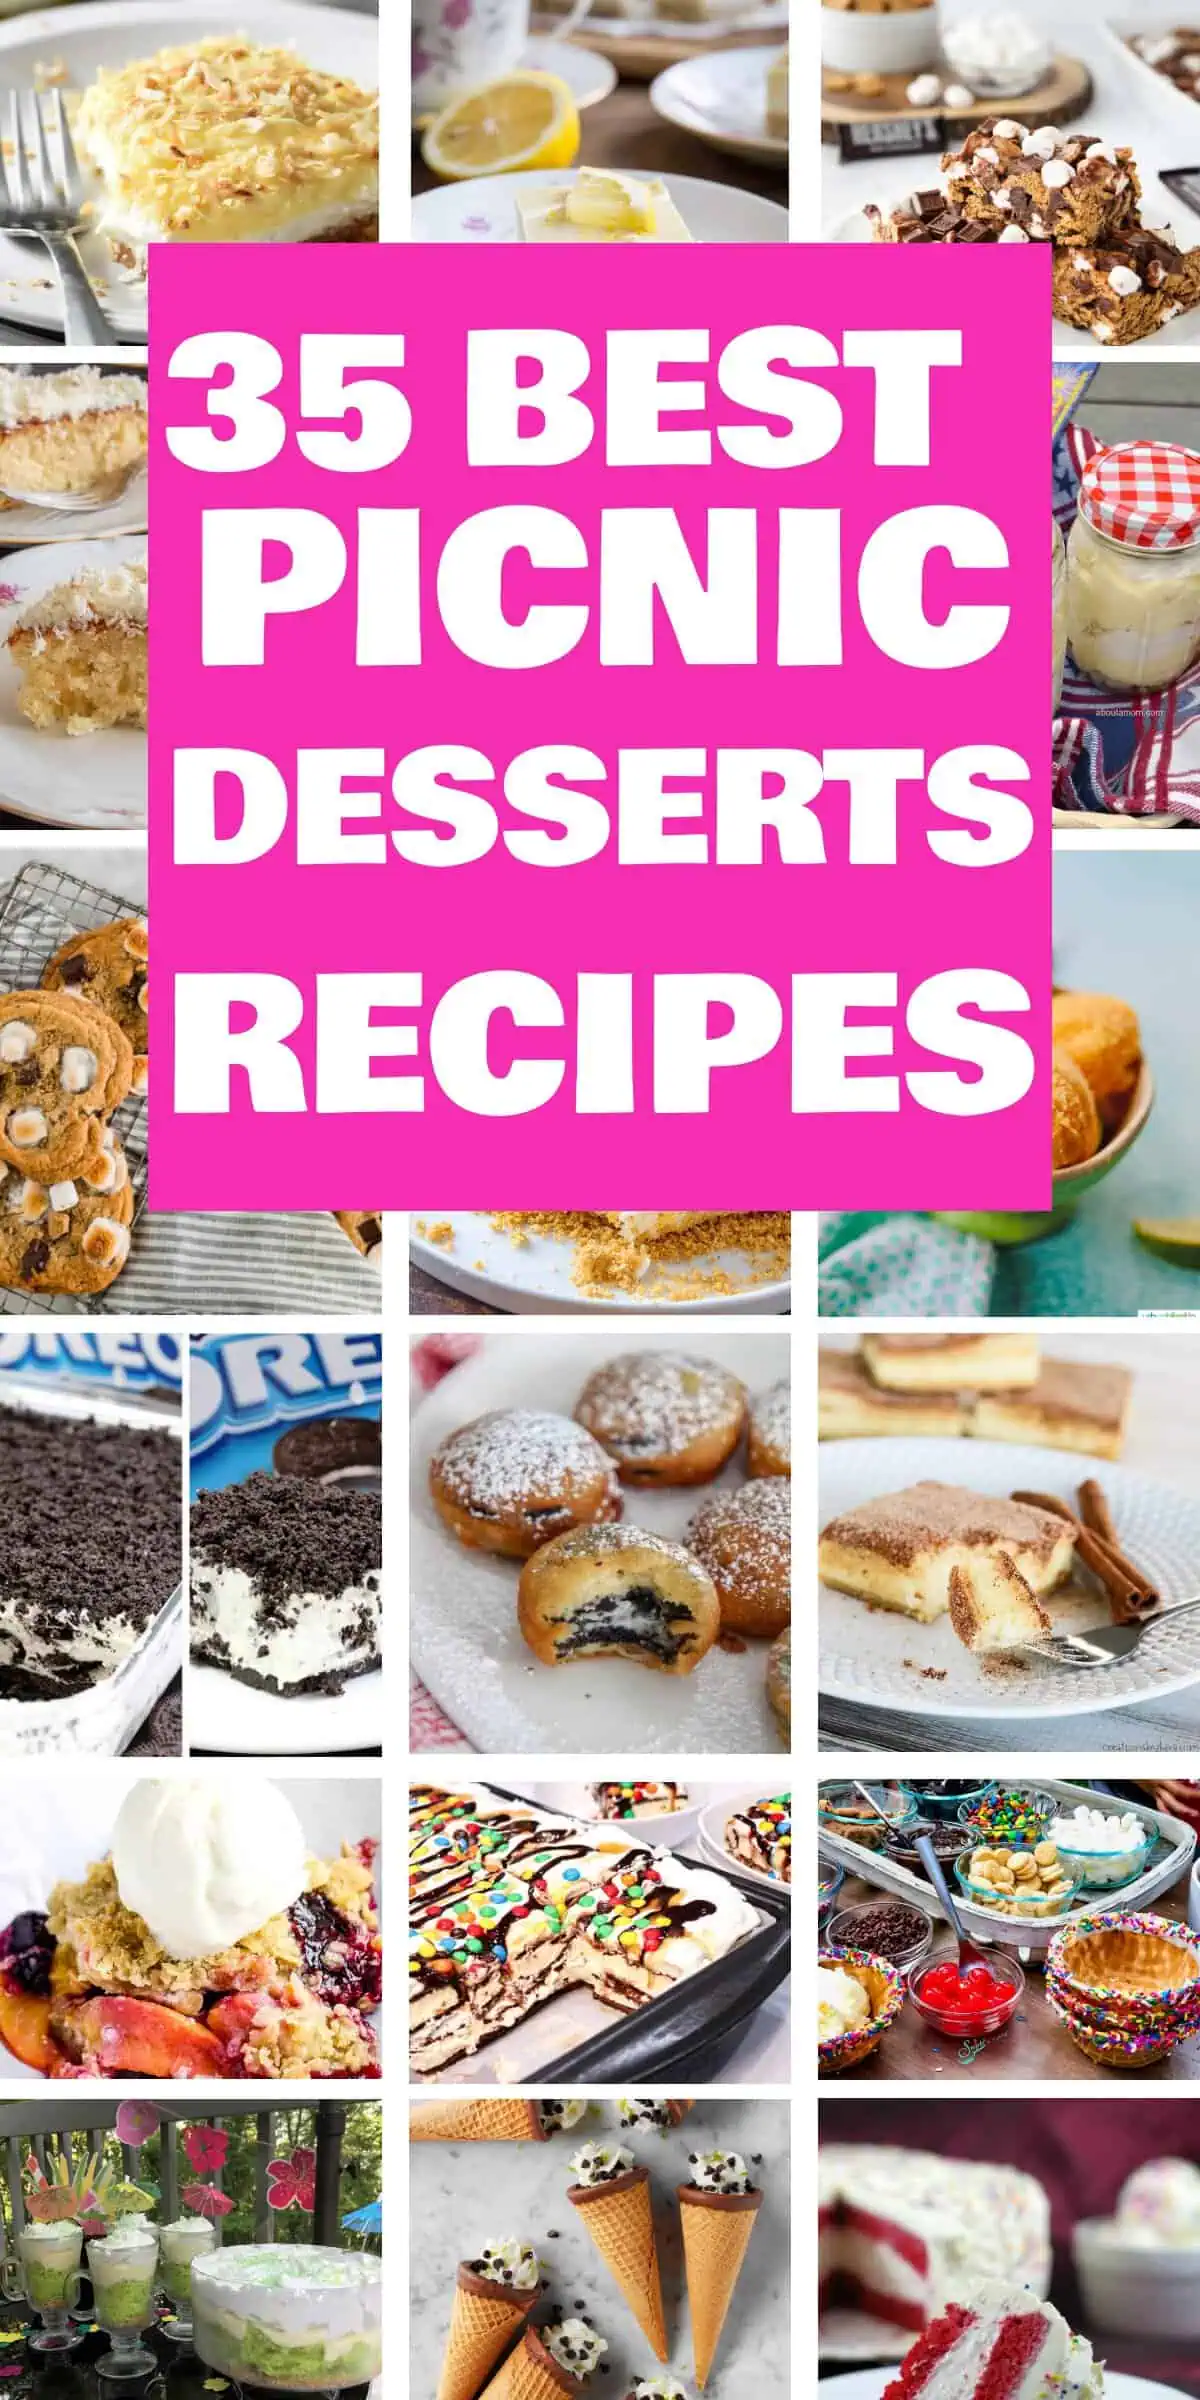 35 Best Picnic Desserts